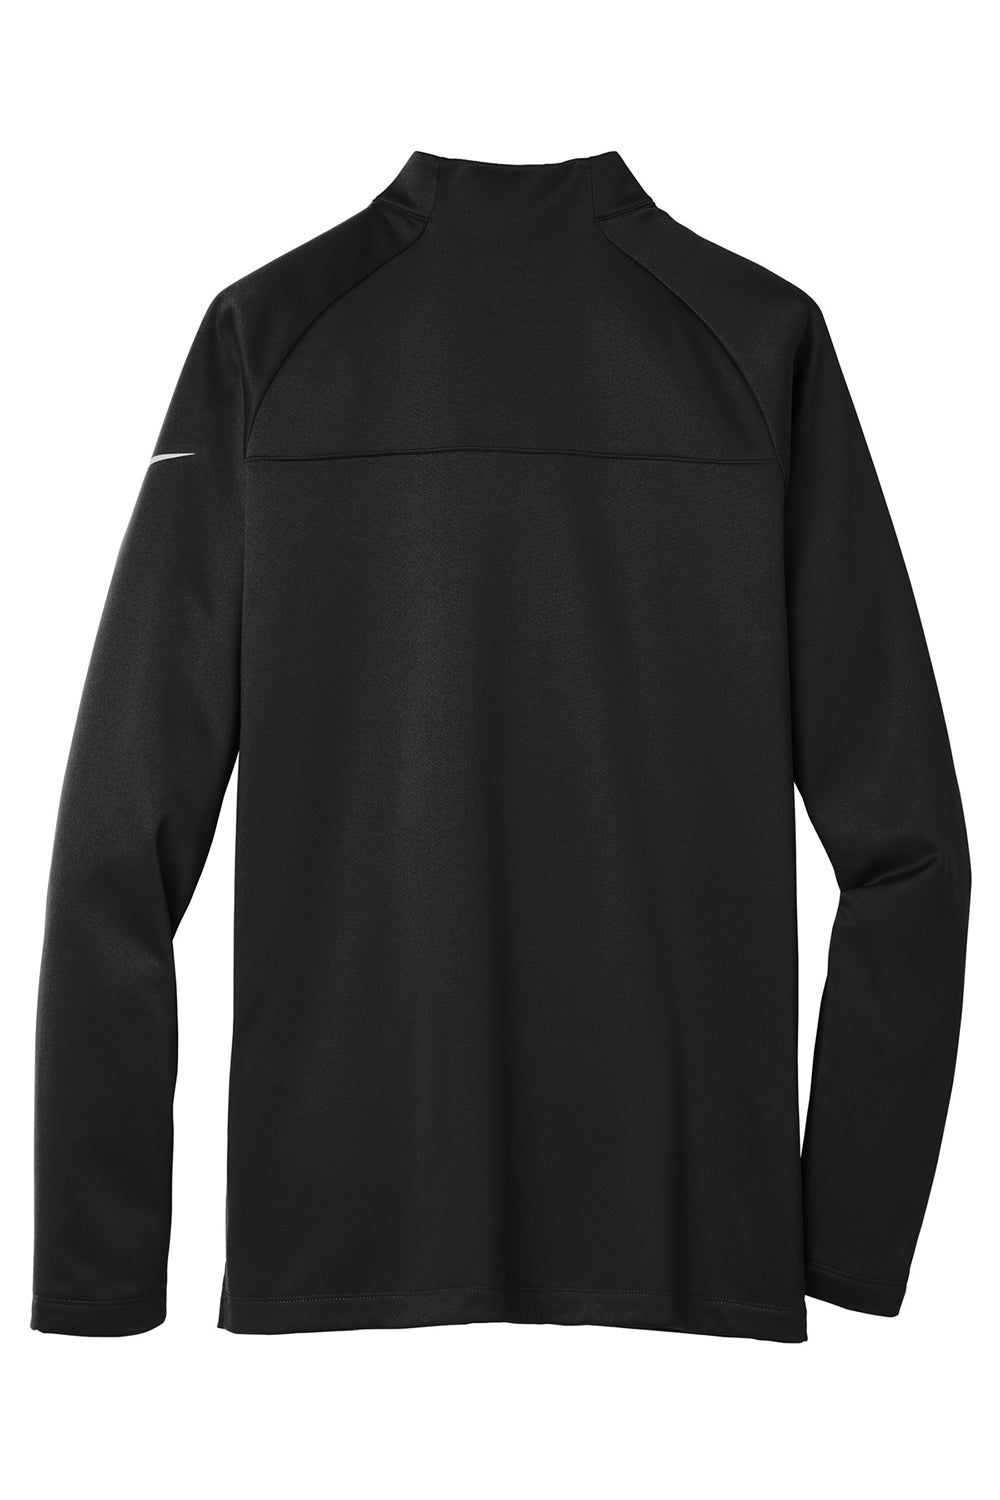 Nike NKAH6254 Mens Therma-Fit Moisture Wicking Fleece 1/4 Zip Sweatshirt Black Flat Back